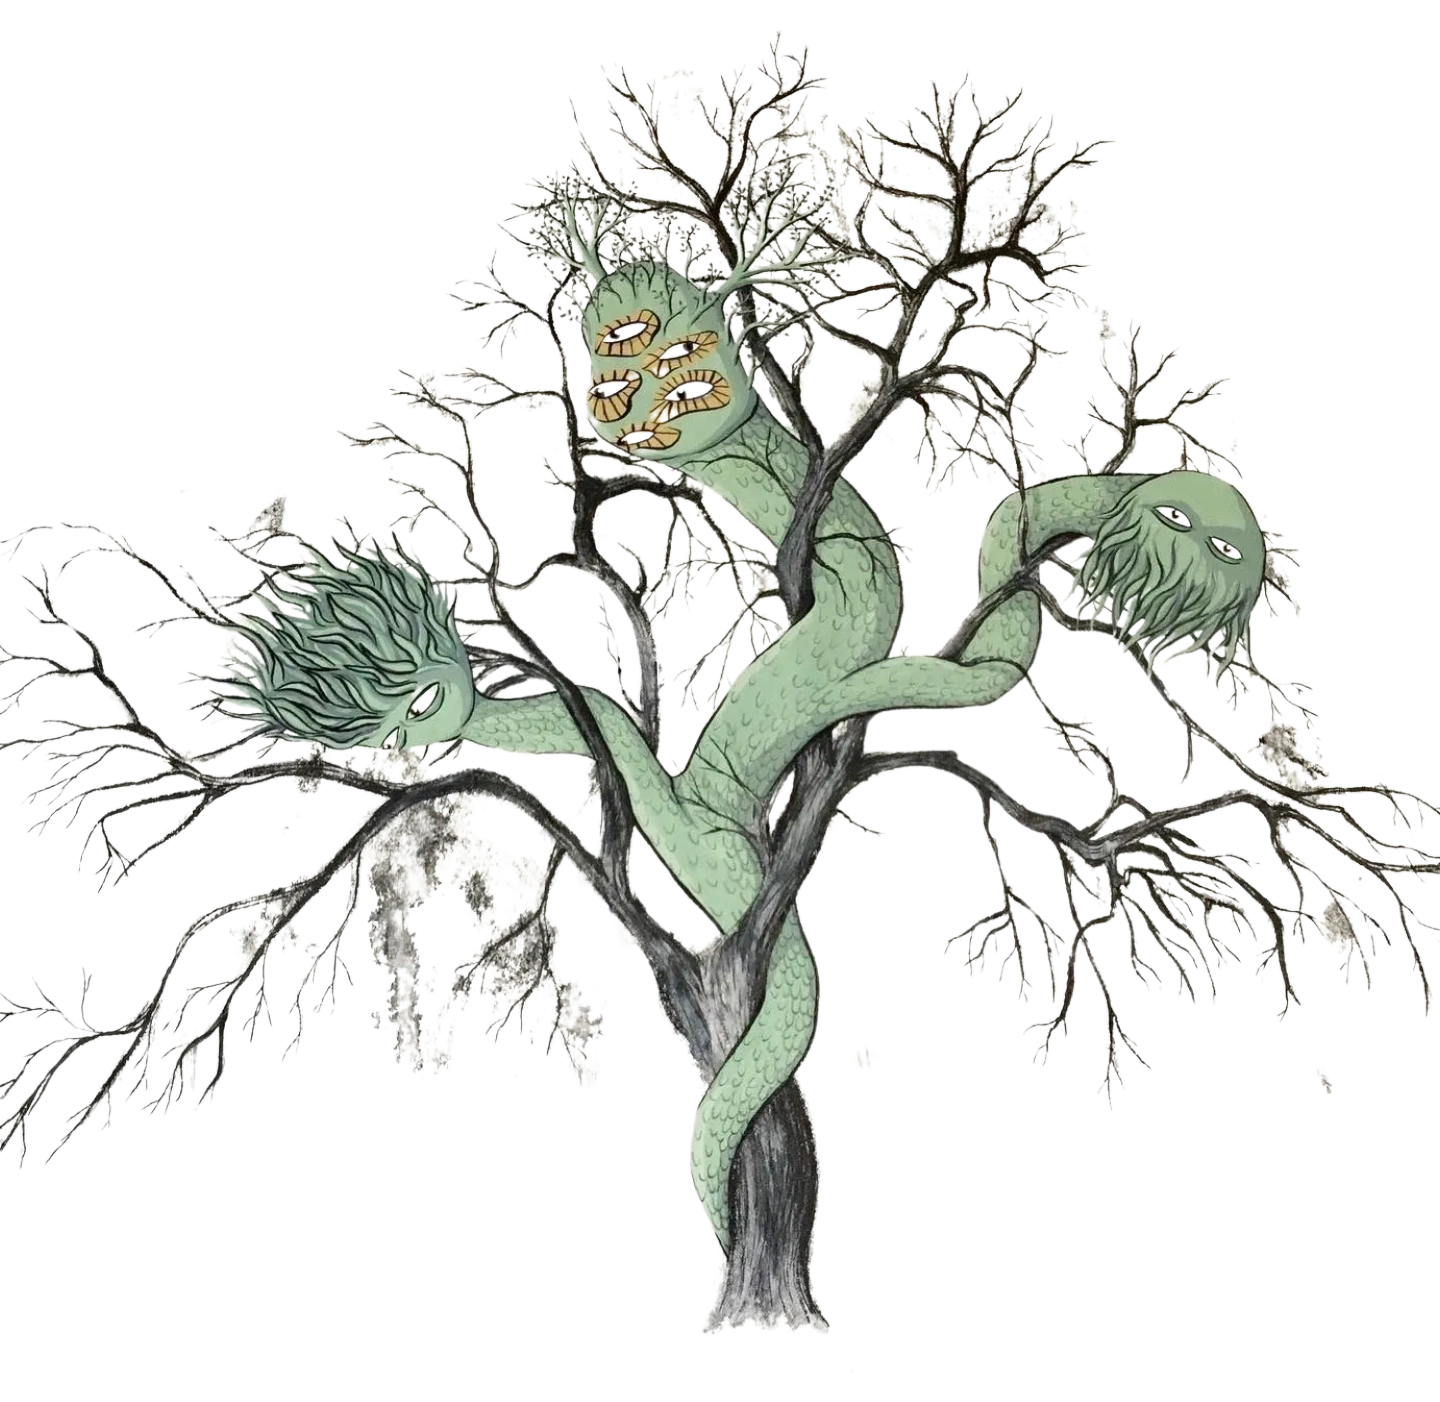 Tree with strange three-headed creature. Gouache, monotype, mixed media illustration.